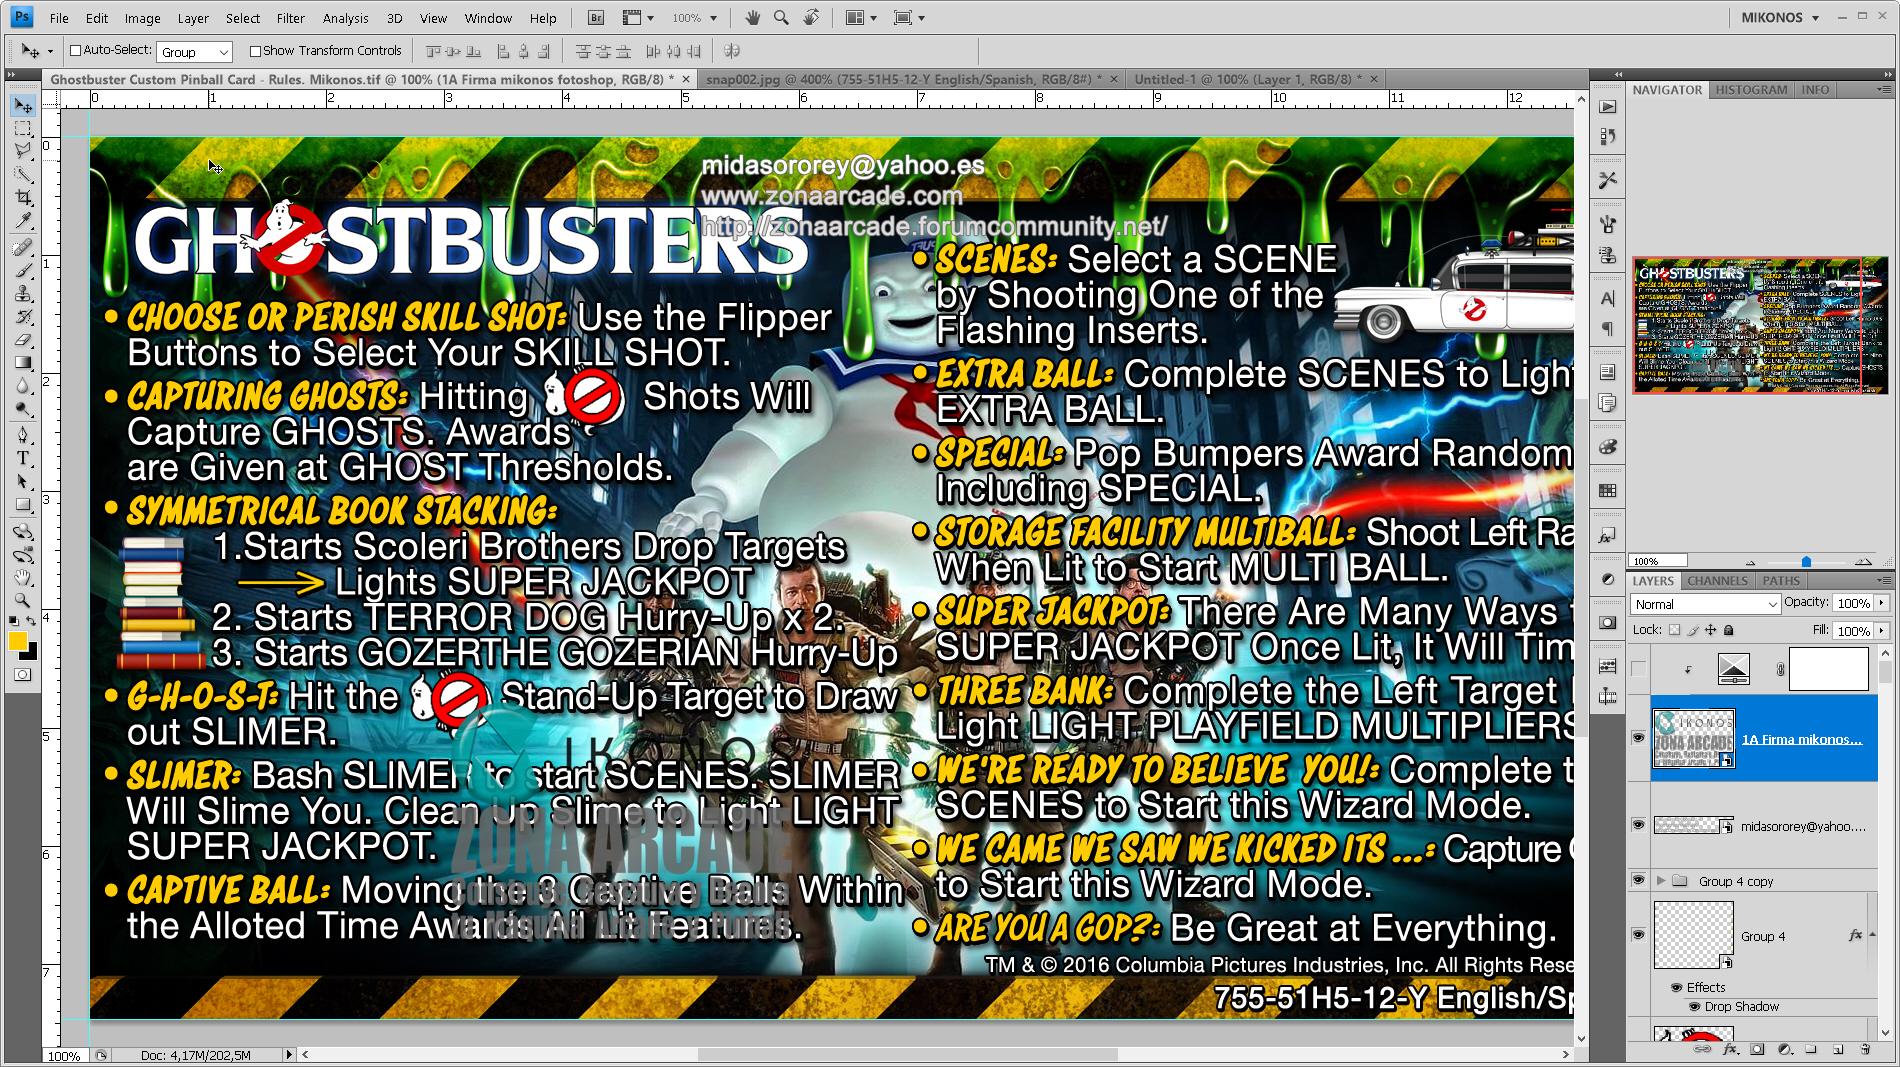 Ghostbusters%20Custom%20Pinball%20Card%20-%20Rules.%20Mikonos2.jpg